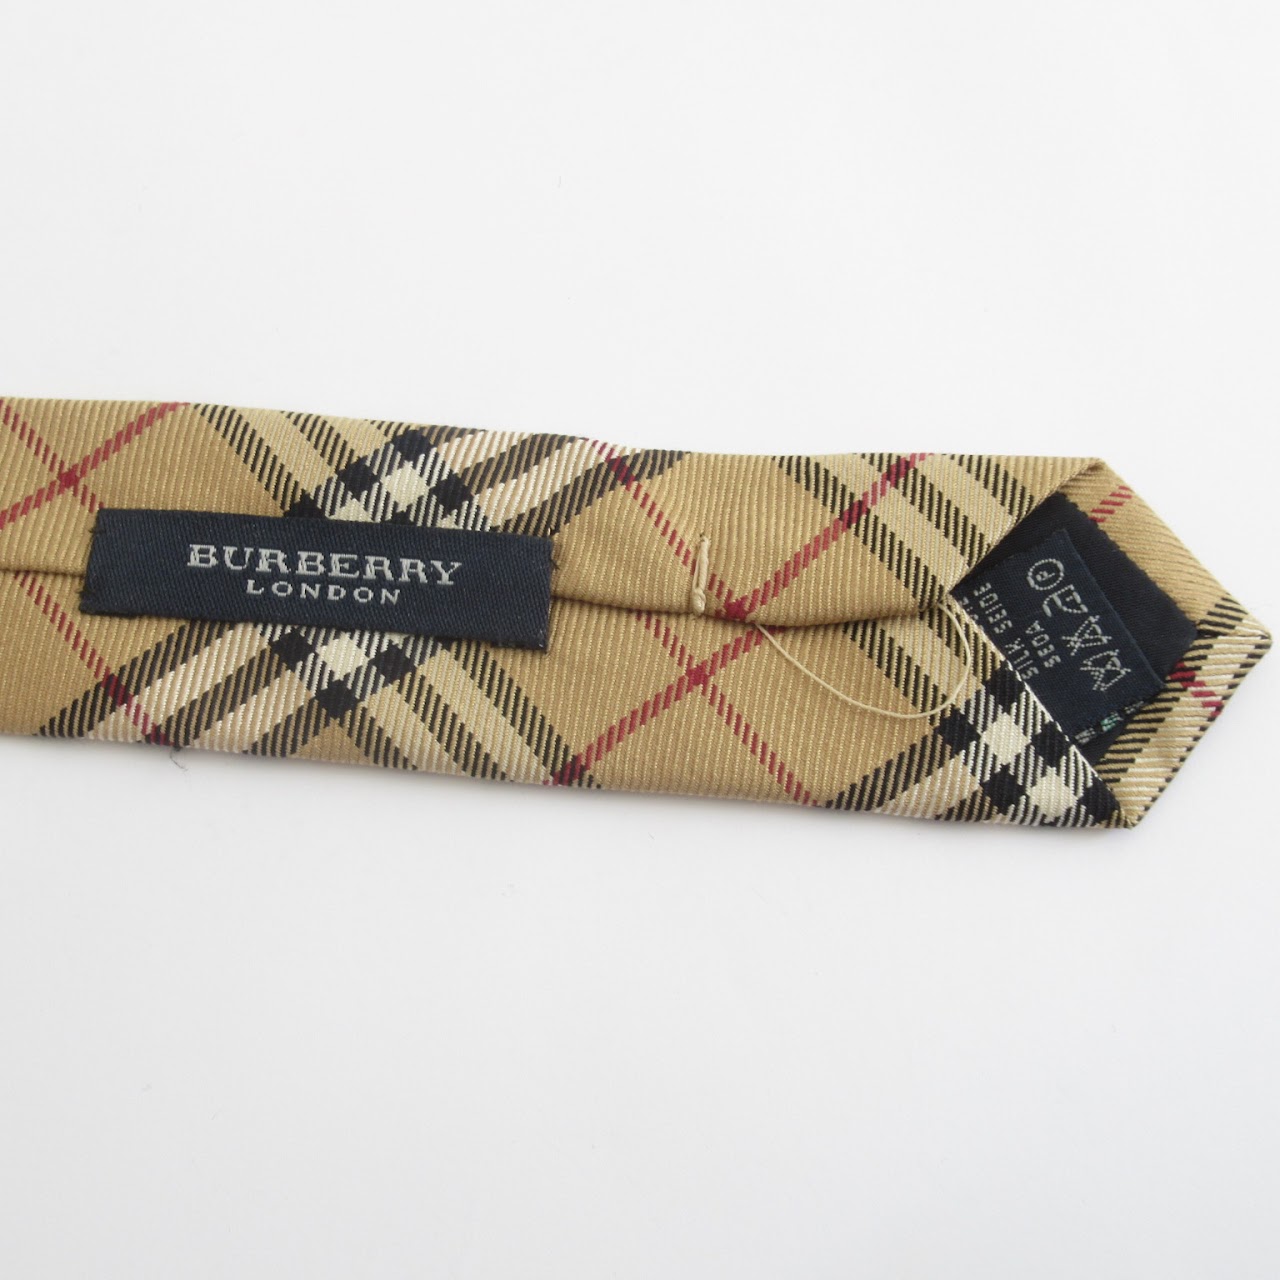 Burberry London Plaid Silk Tie